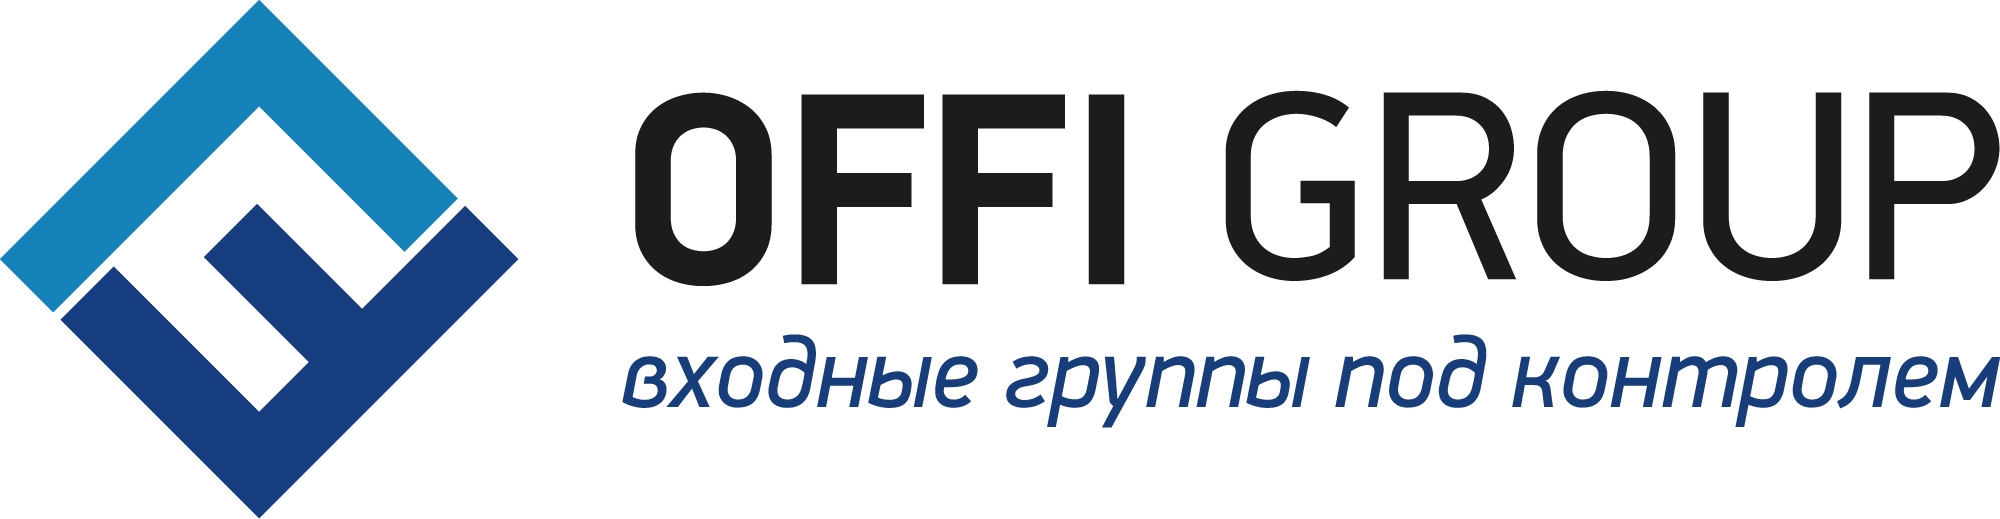 logo_text